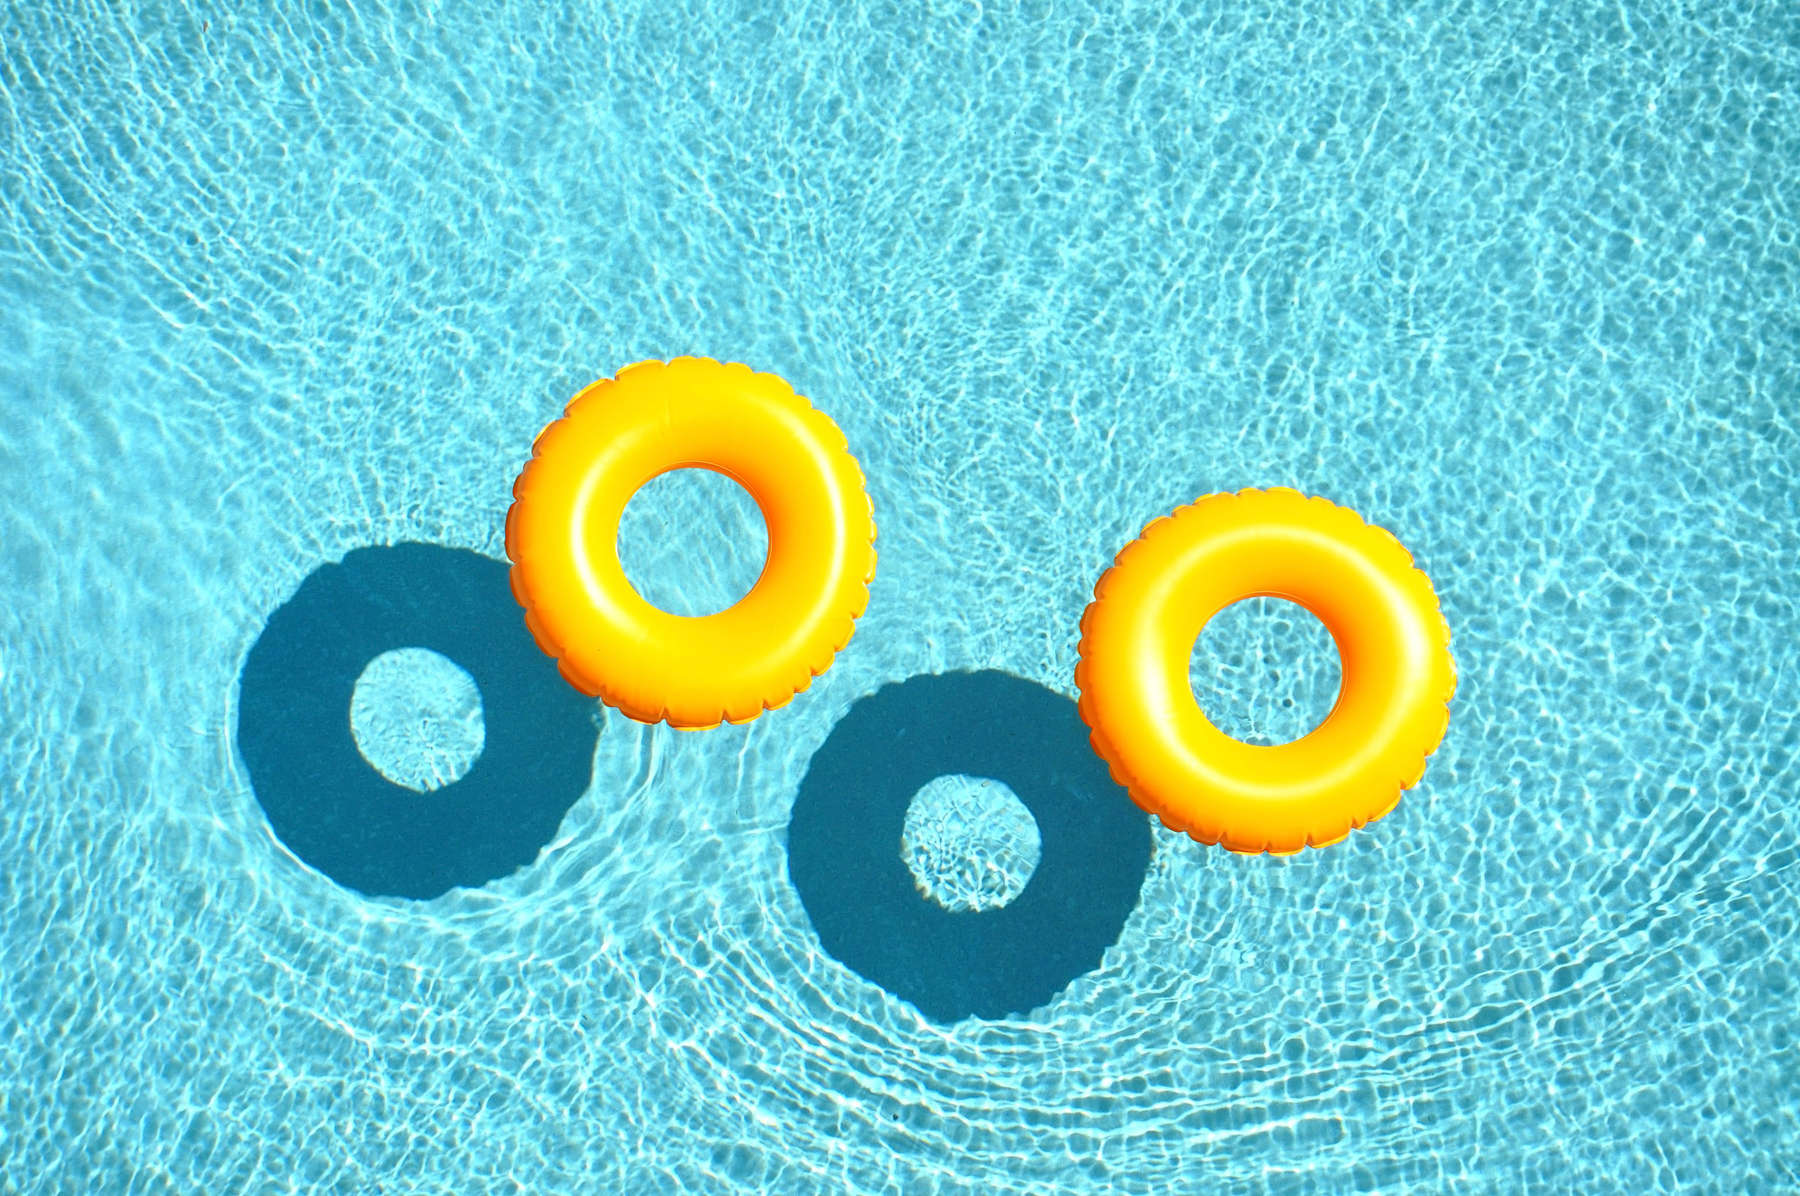 Two yellow pool floats